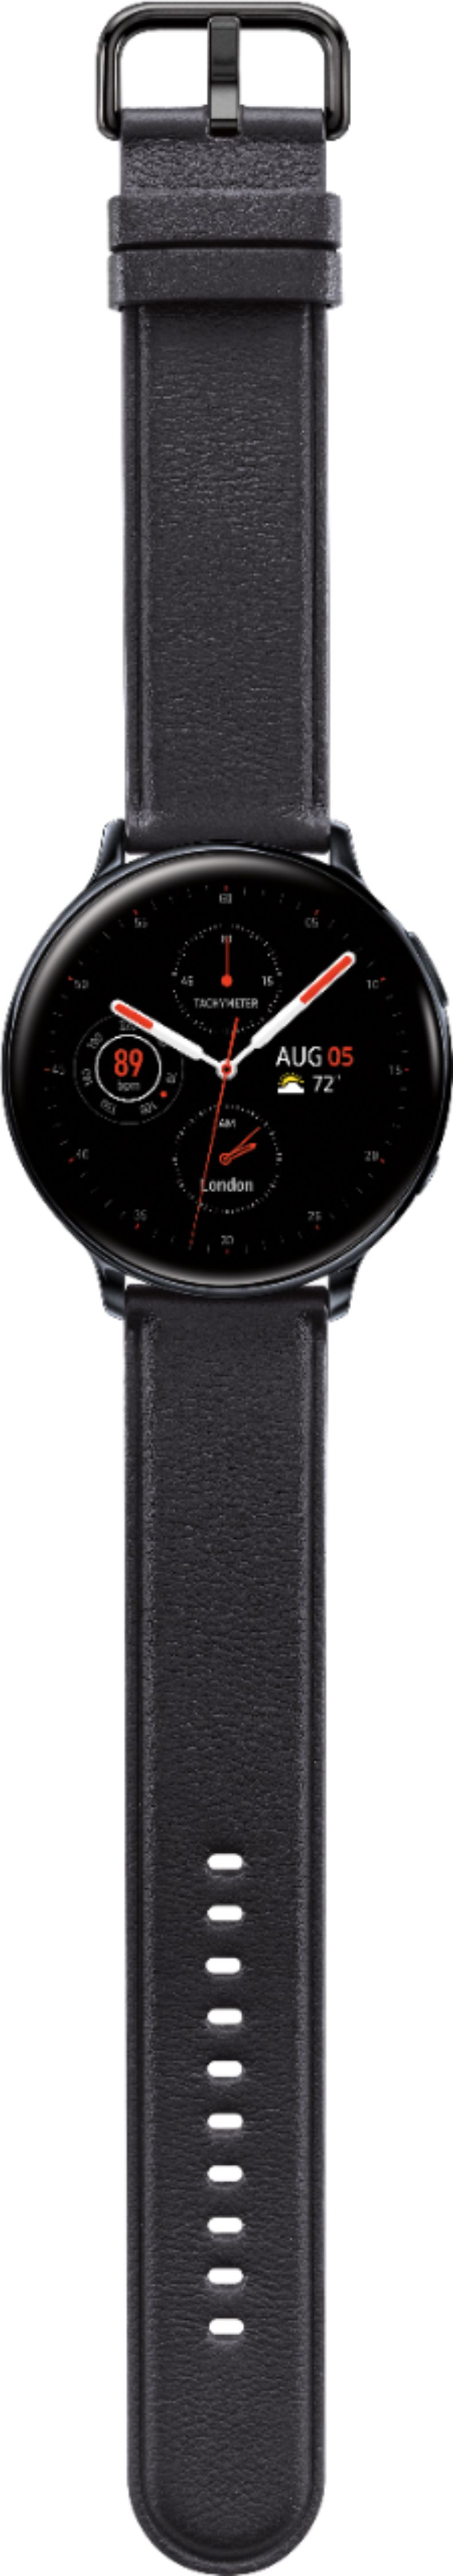 Samsung SM-R820NZKAXAR Galaxy Watch Active2 44mm (Black) - (Renewed)